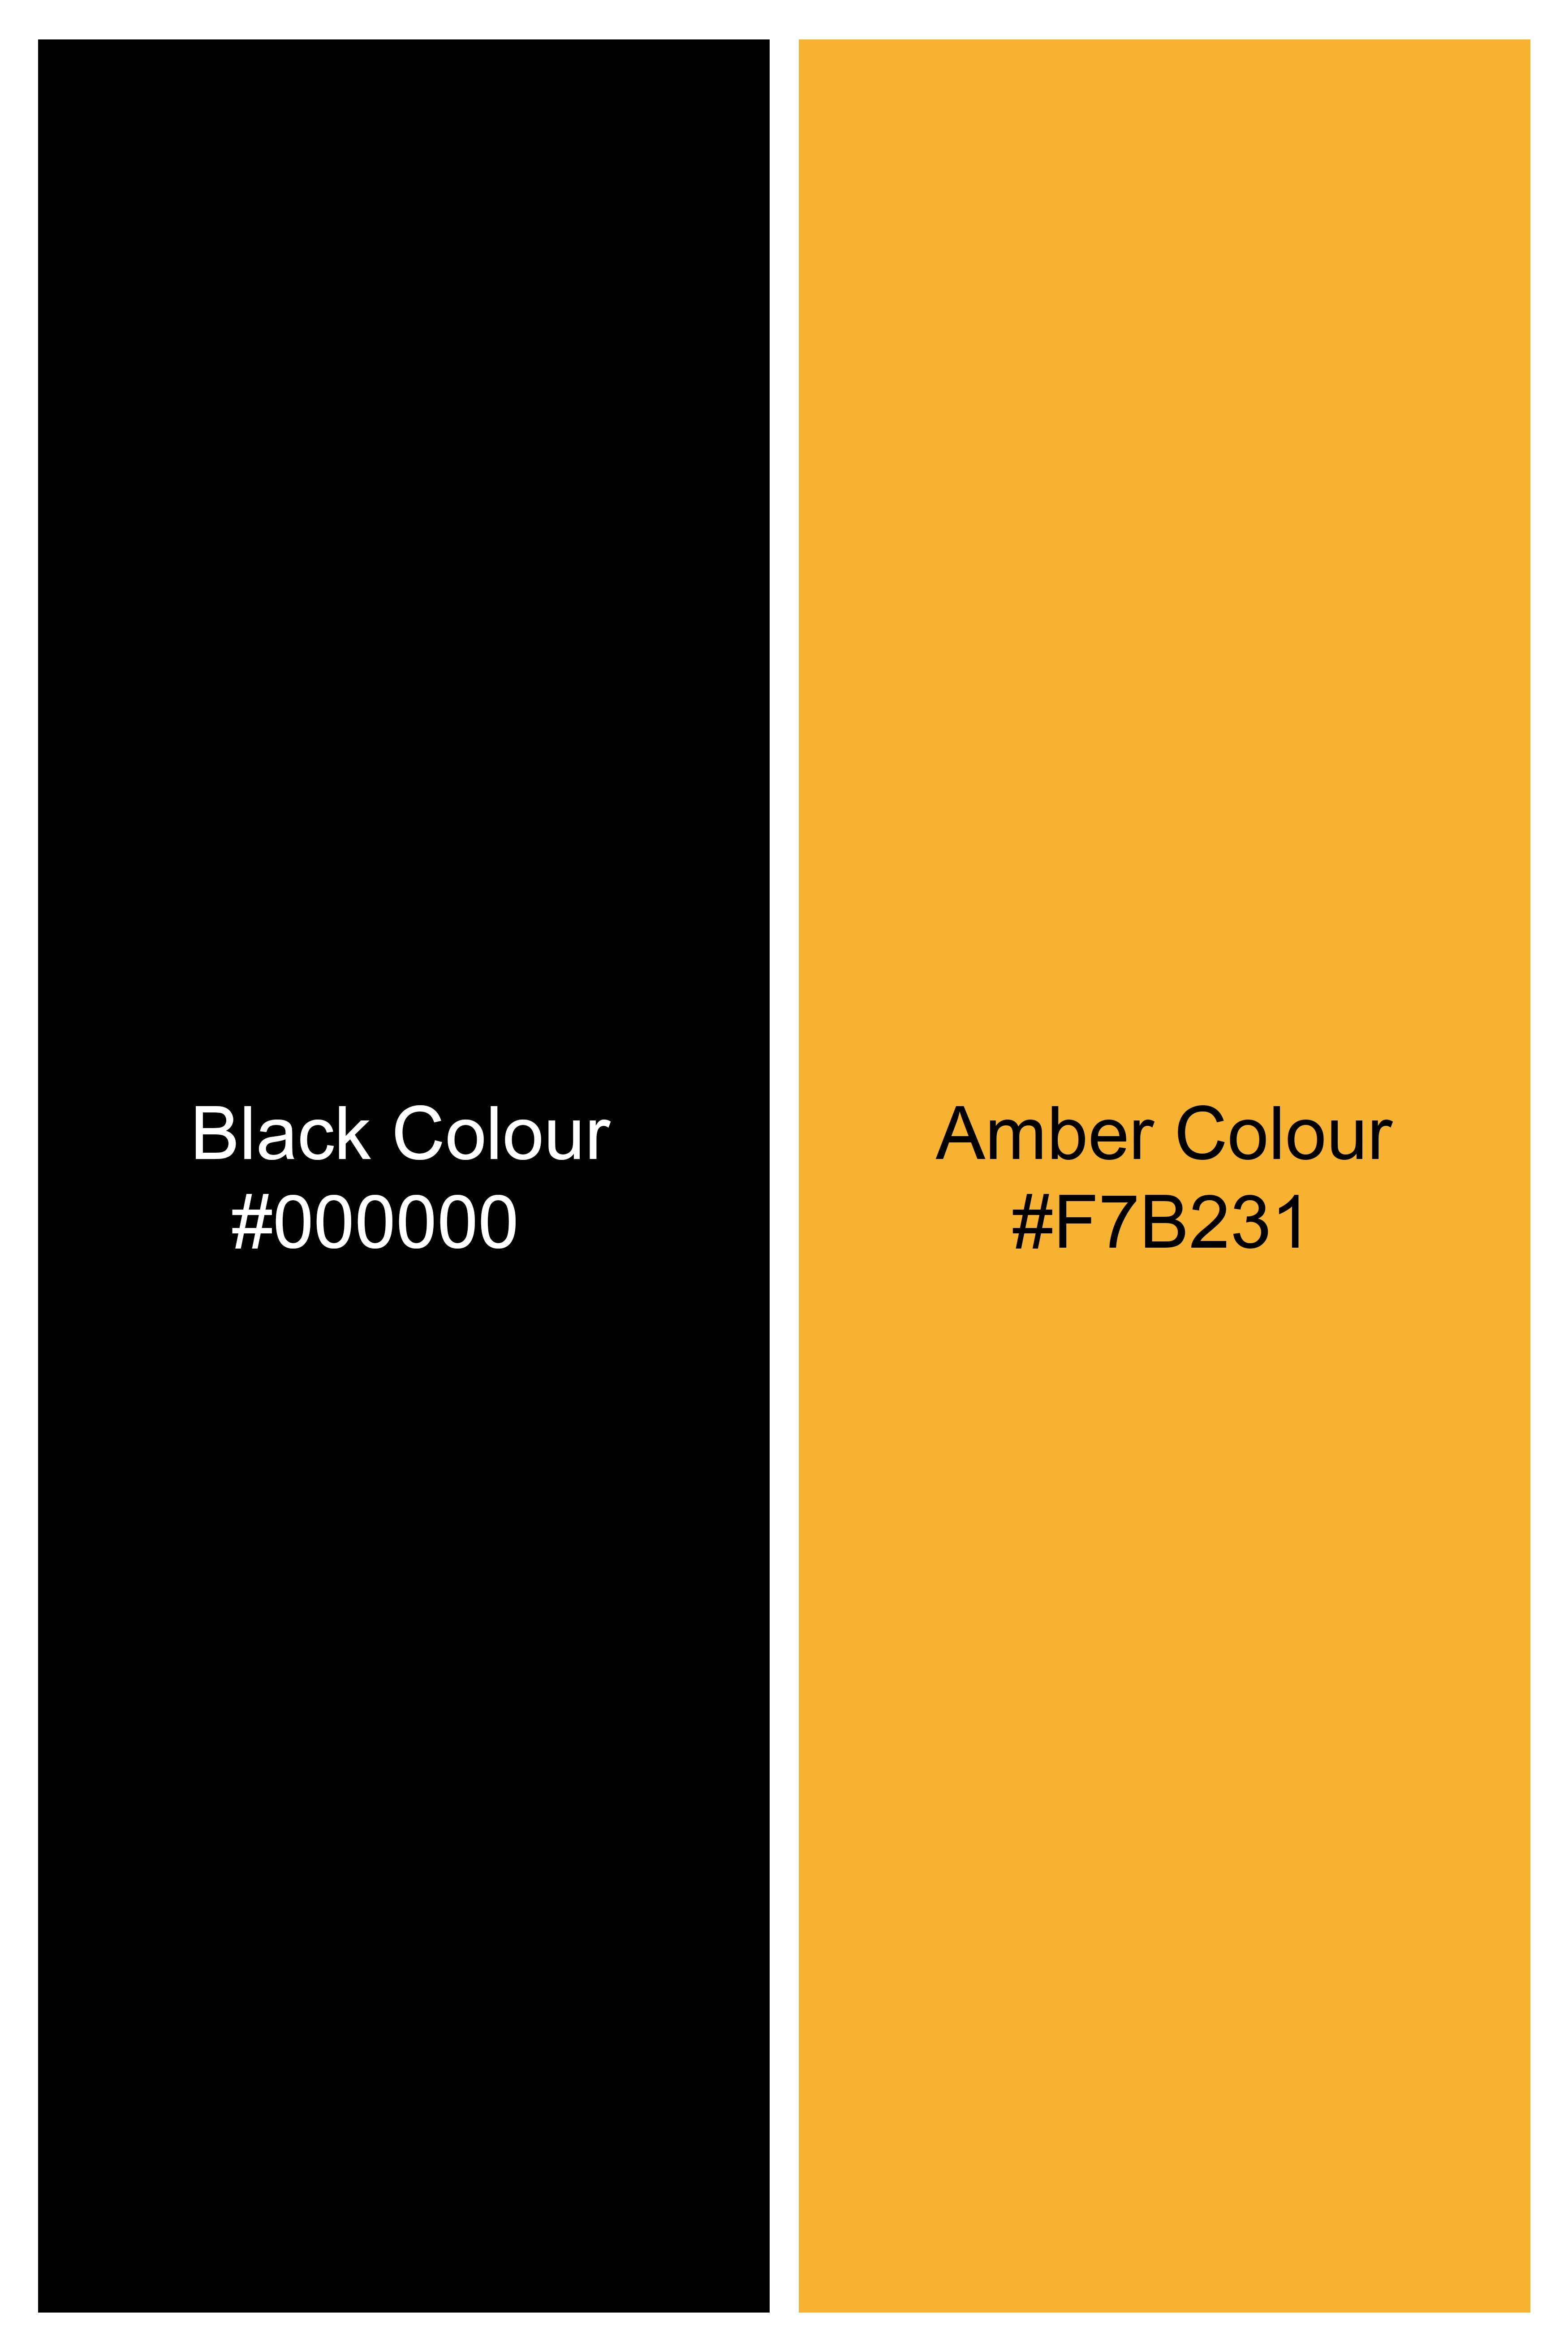 Jade Black and Amber Yellow Premium Cotton T-shirt TS946-S, TS946-M, TS946-L, TS946-XL, TS946-XXL